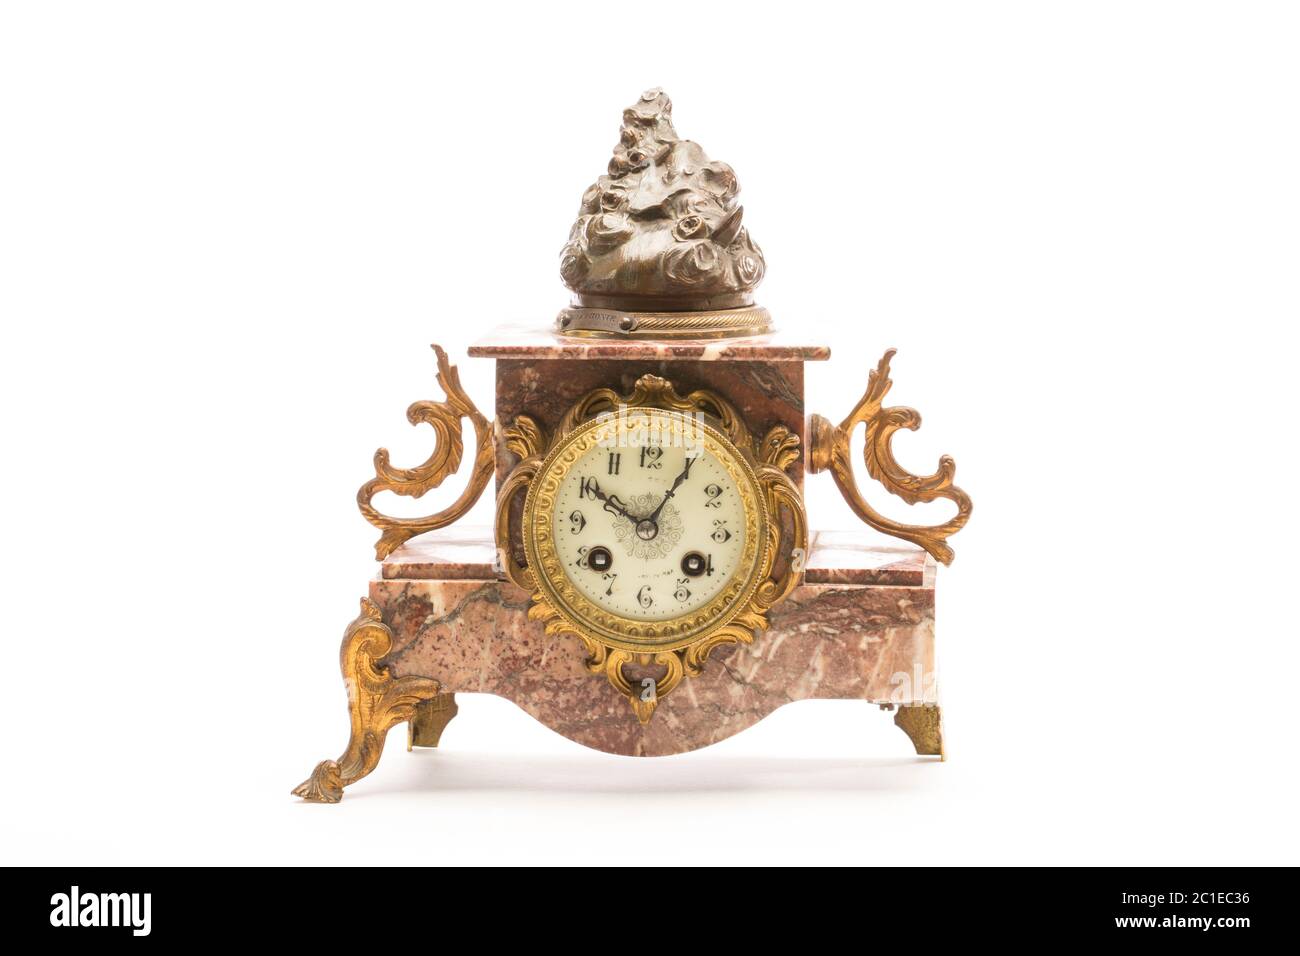 Foto de estudio de reloj de sobremesa antiguo sobre fondo blanco. Europa Occidental Foto de stock